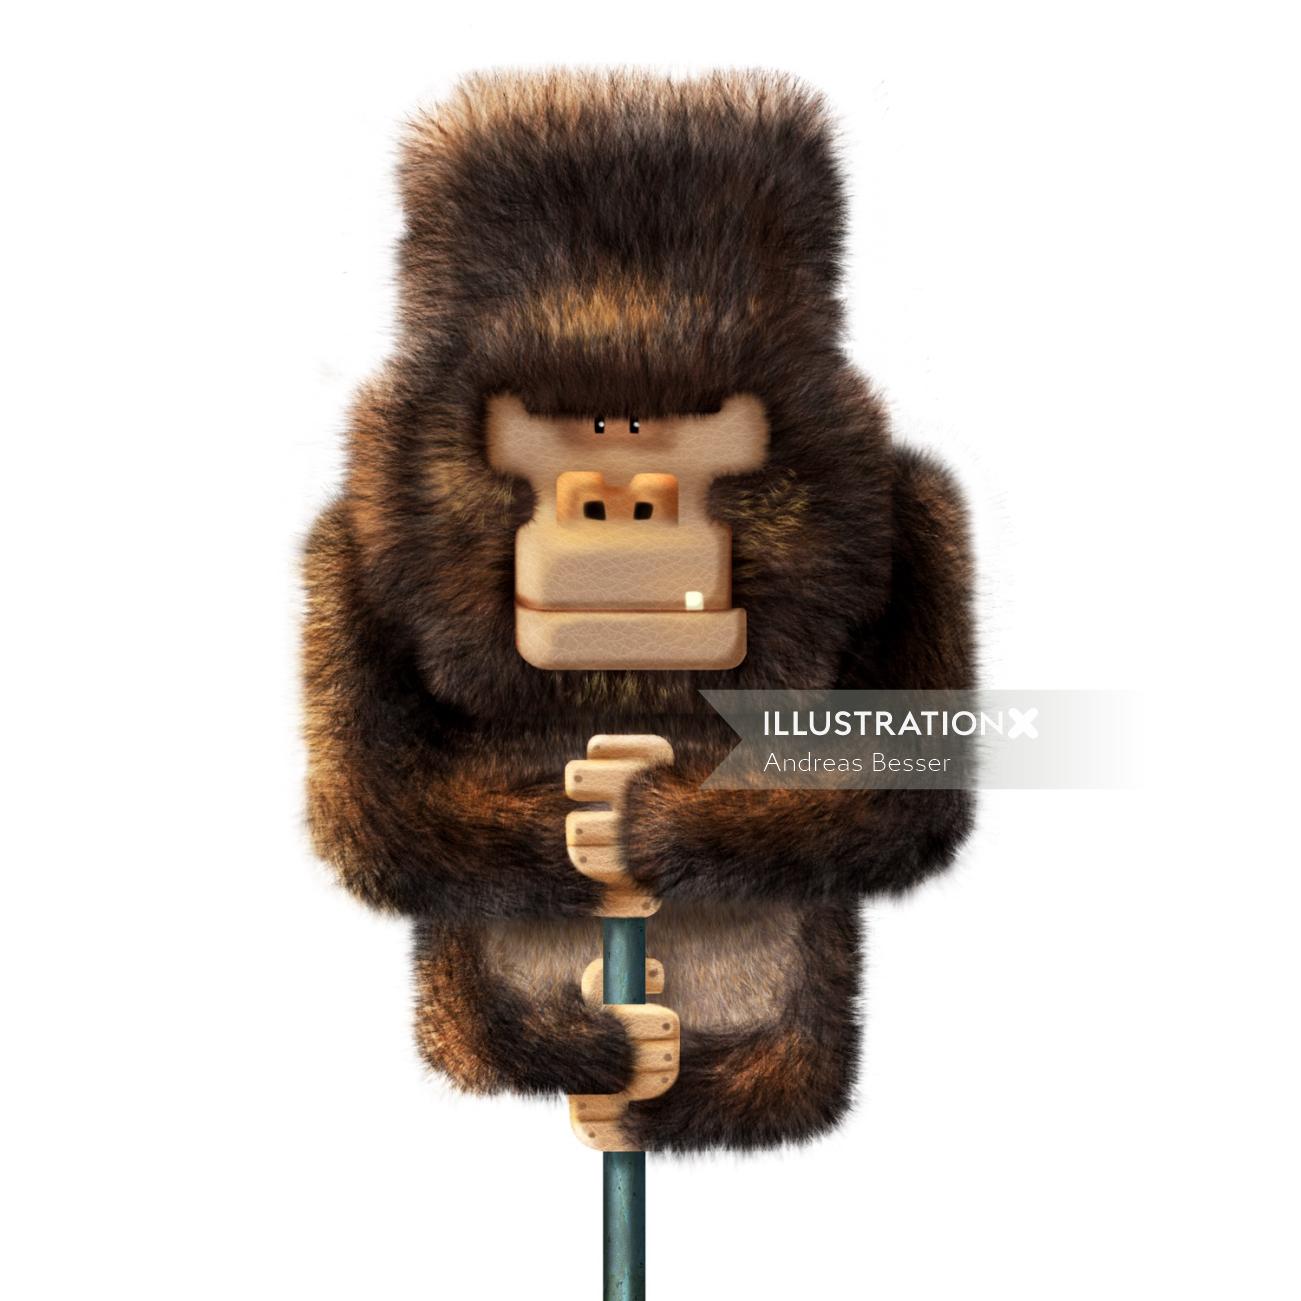 Digital illustration of a chimpangee on pole
